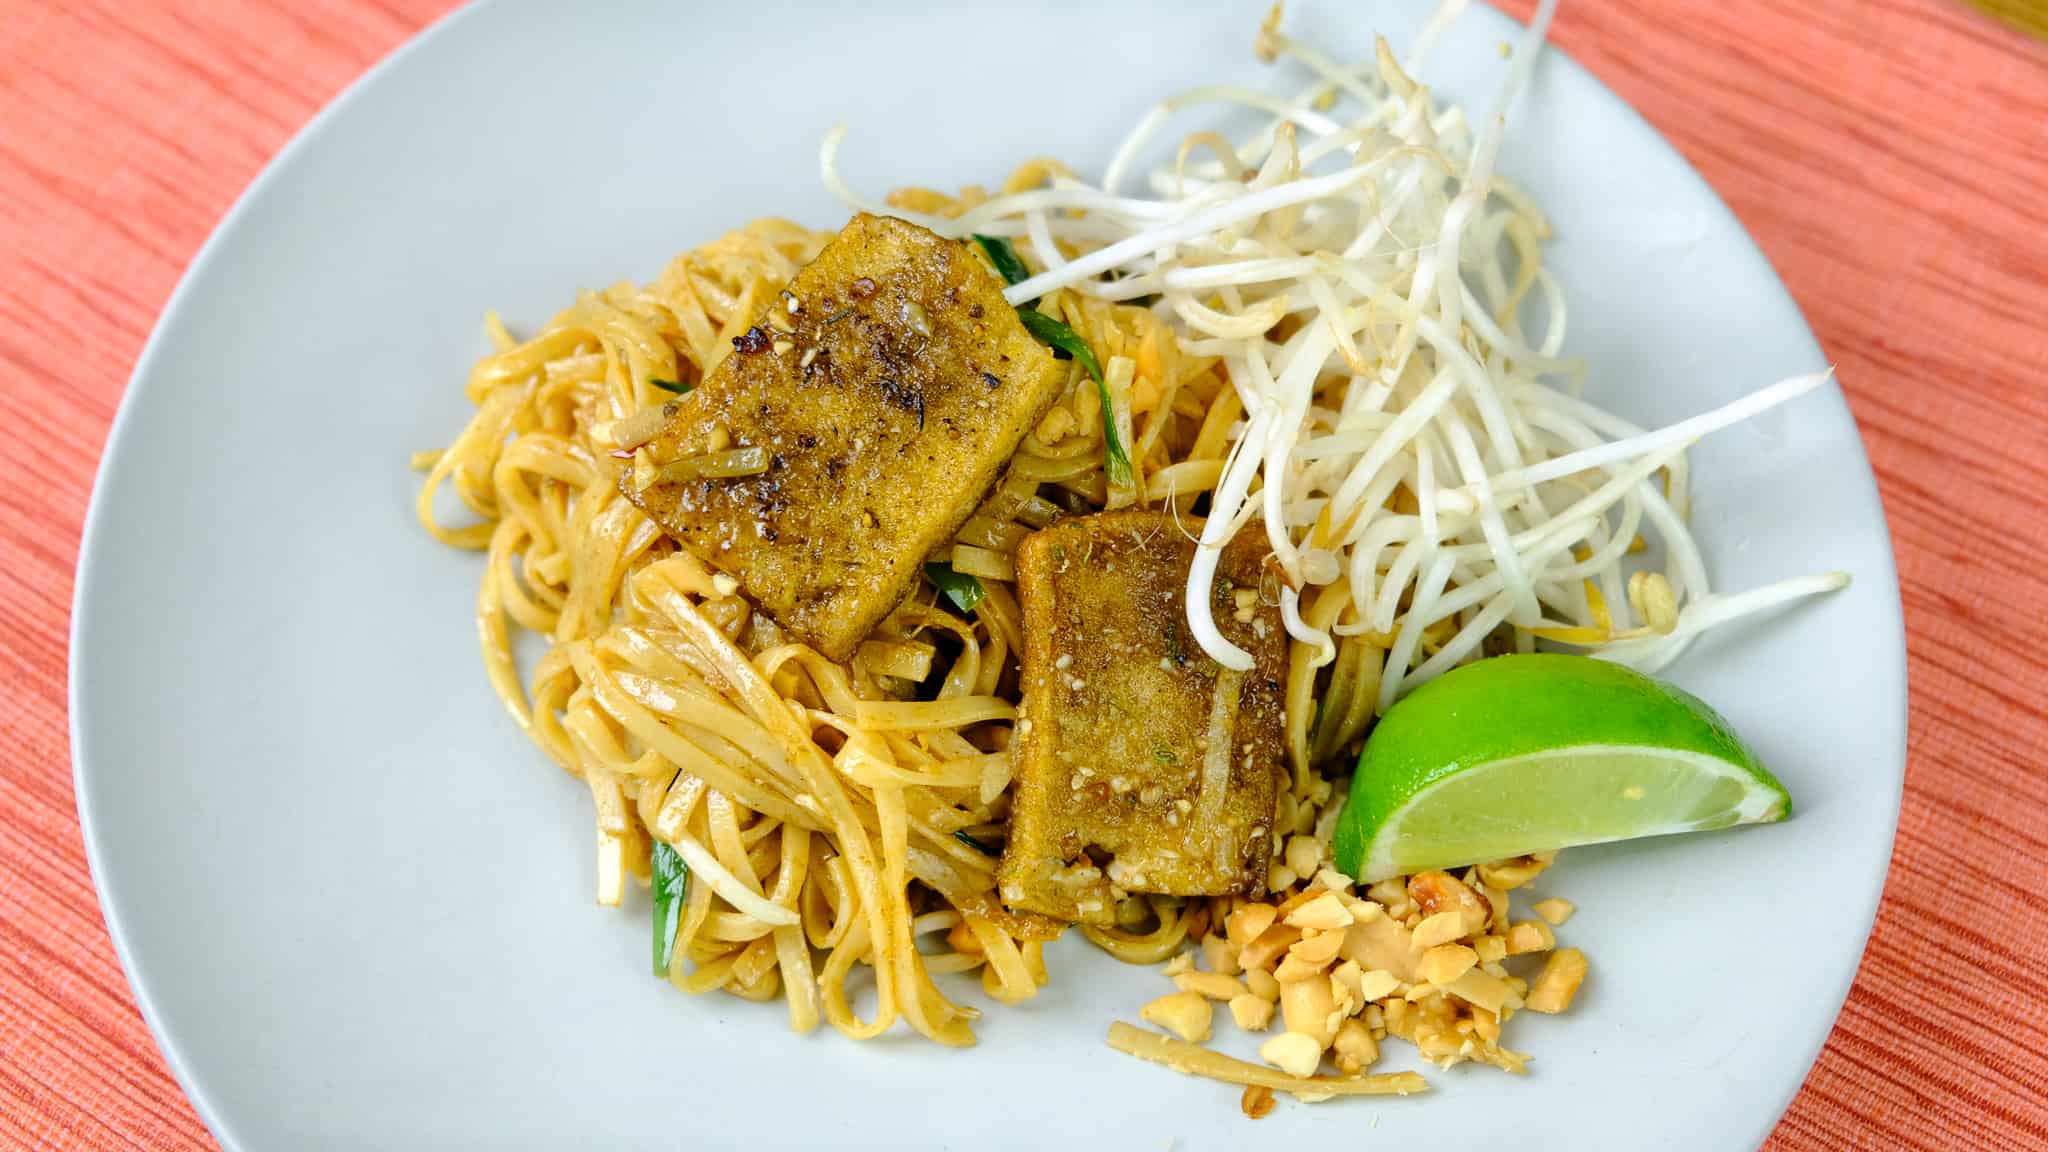 Vegan Pad Thai with mung beans